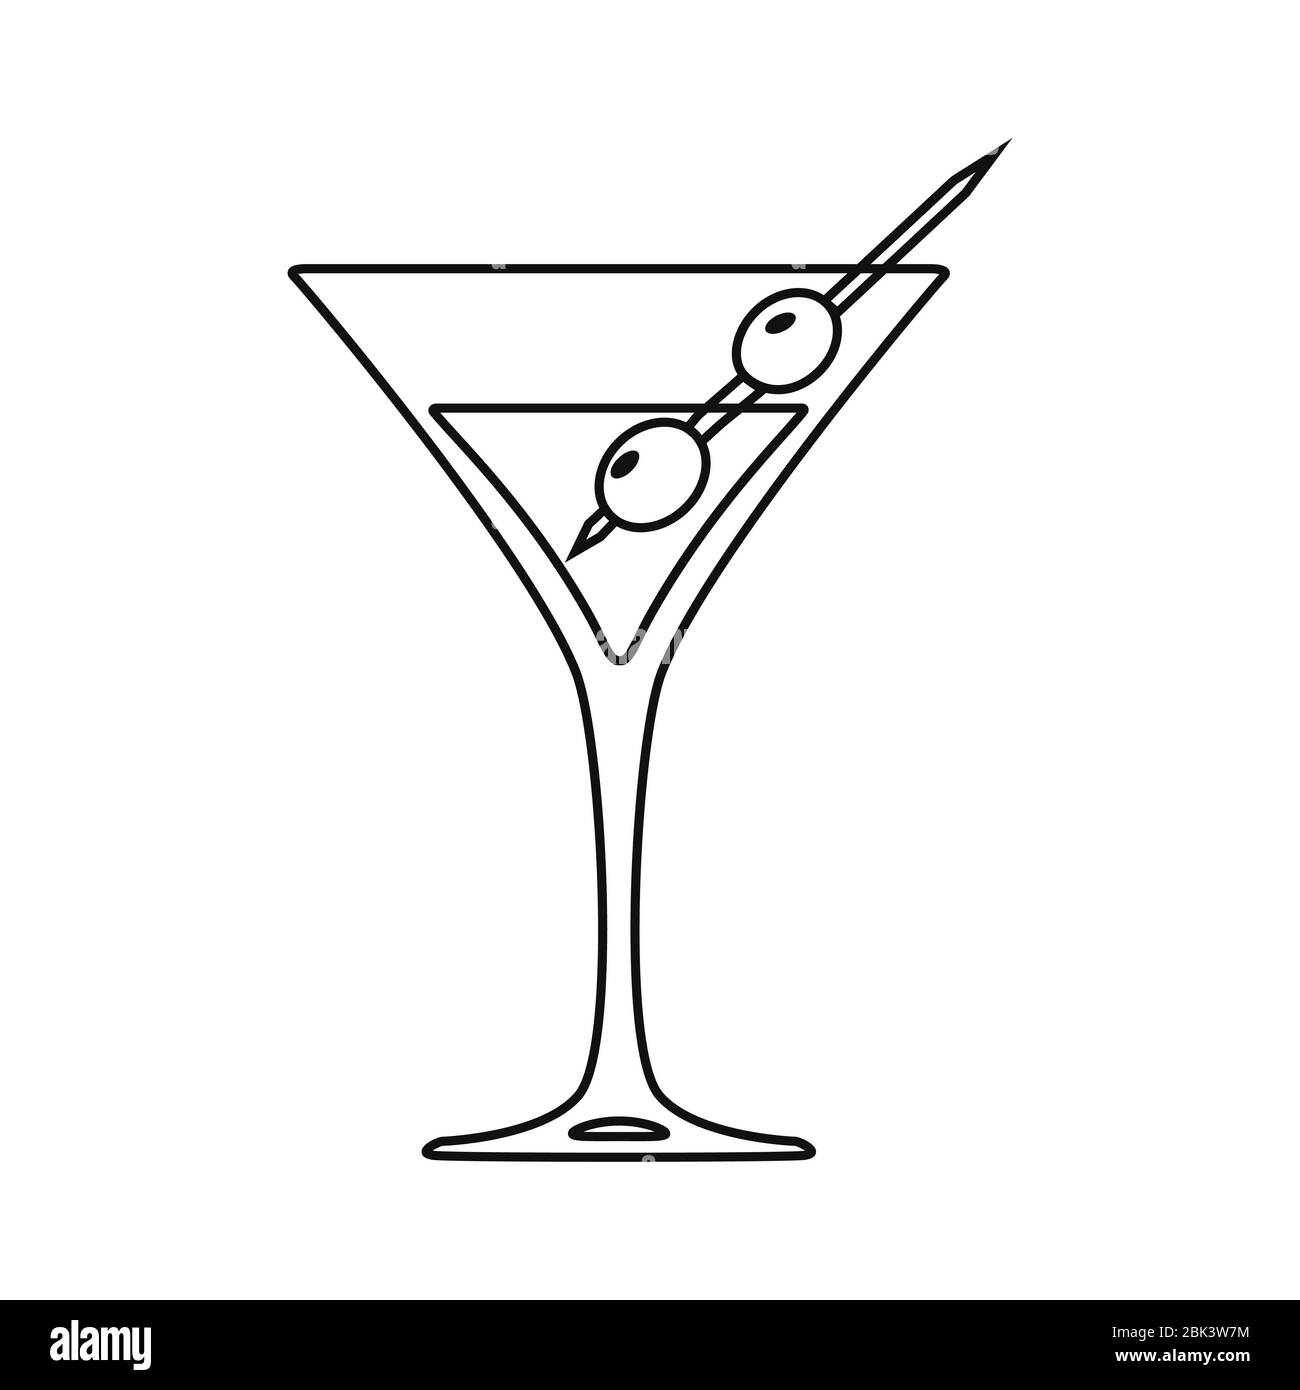 https://c8.alamy.com/comp/2BK3W7M/cocktail-glass-line-art-design-on-white-background-vector-illustration-2BK3W7M.jpg